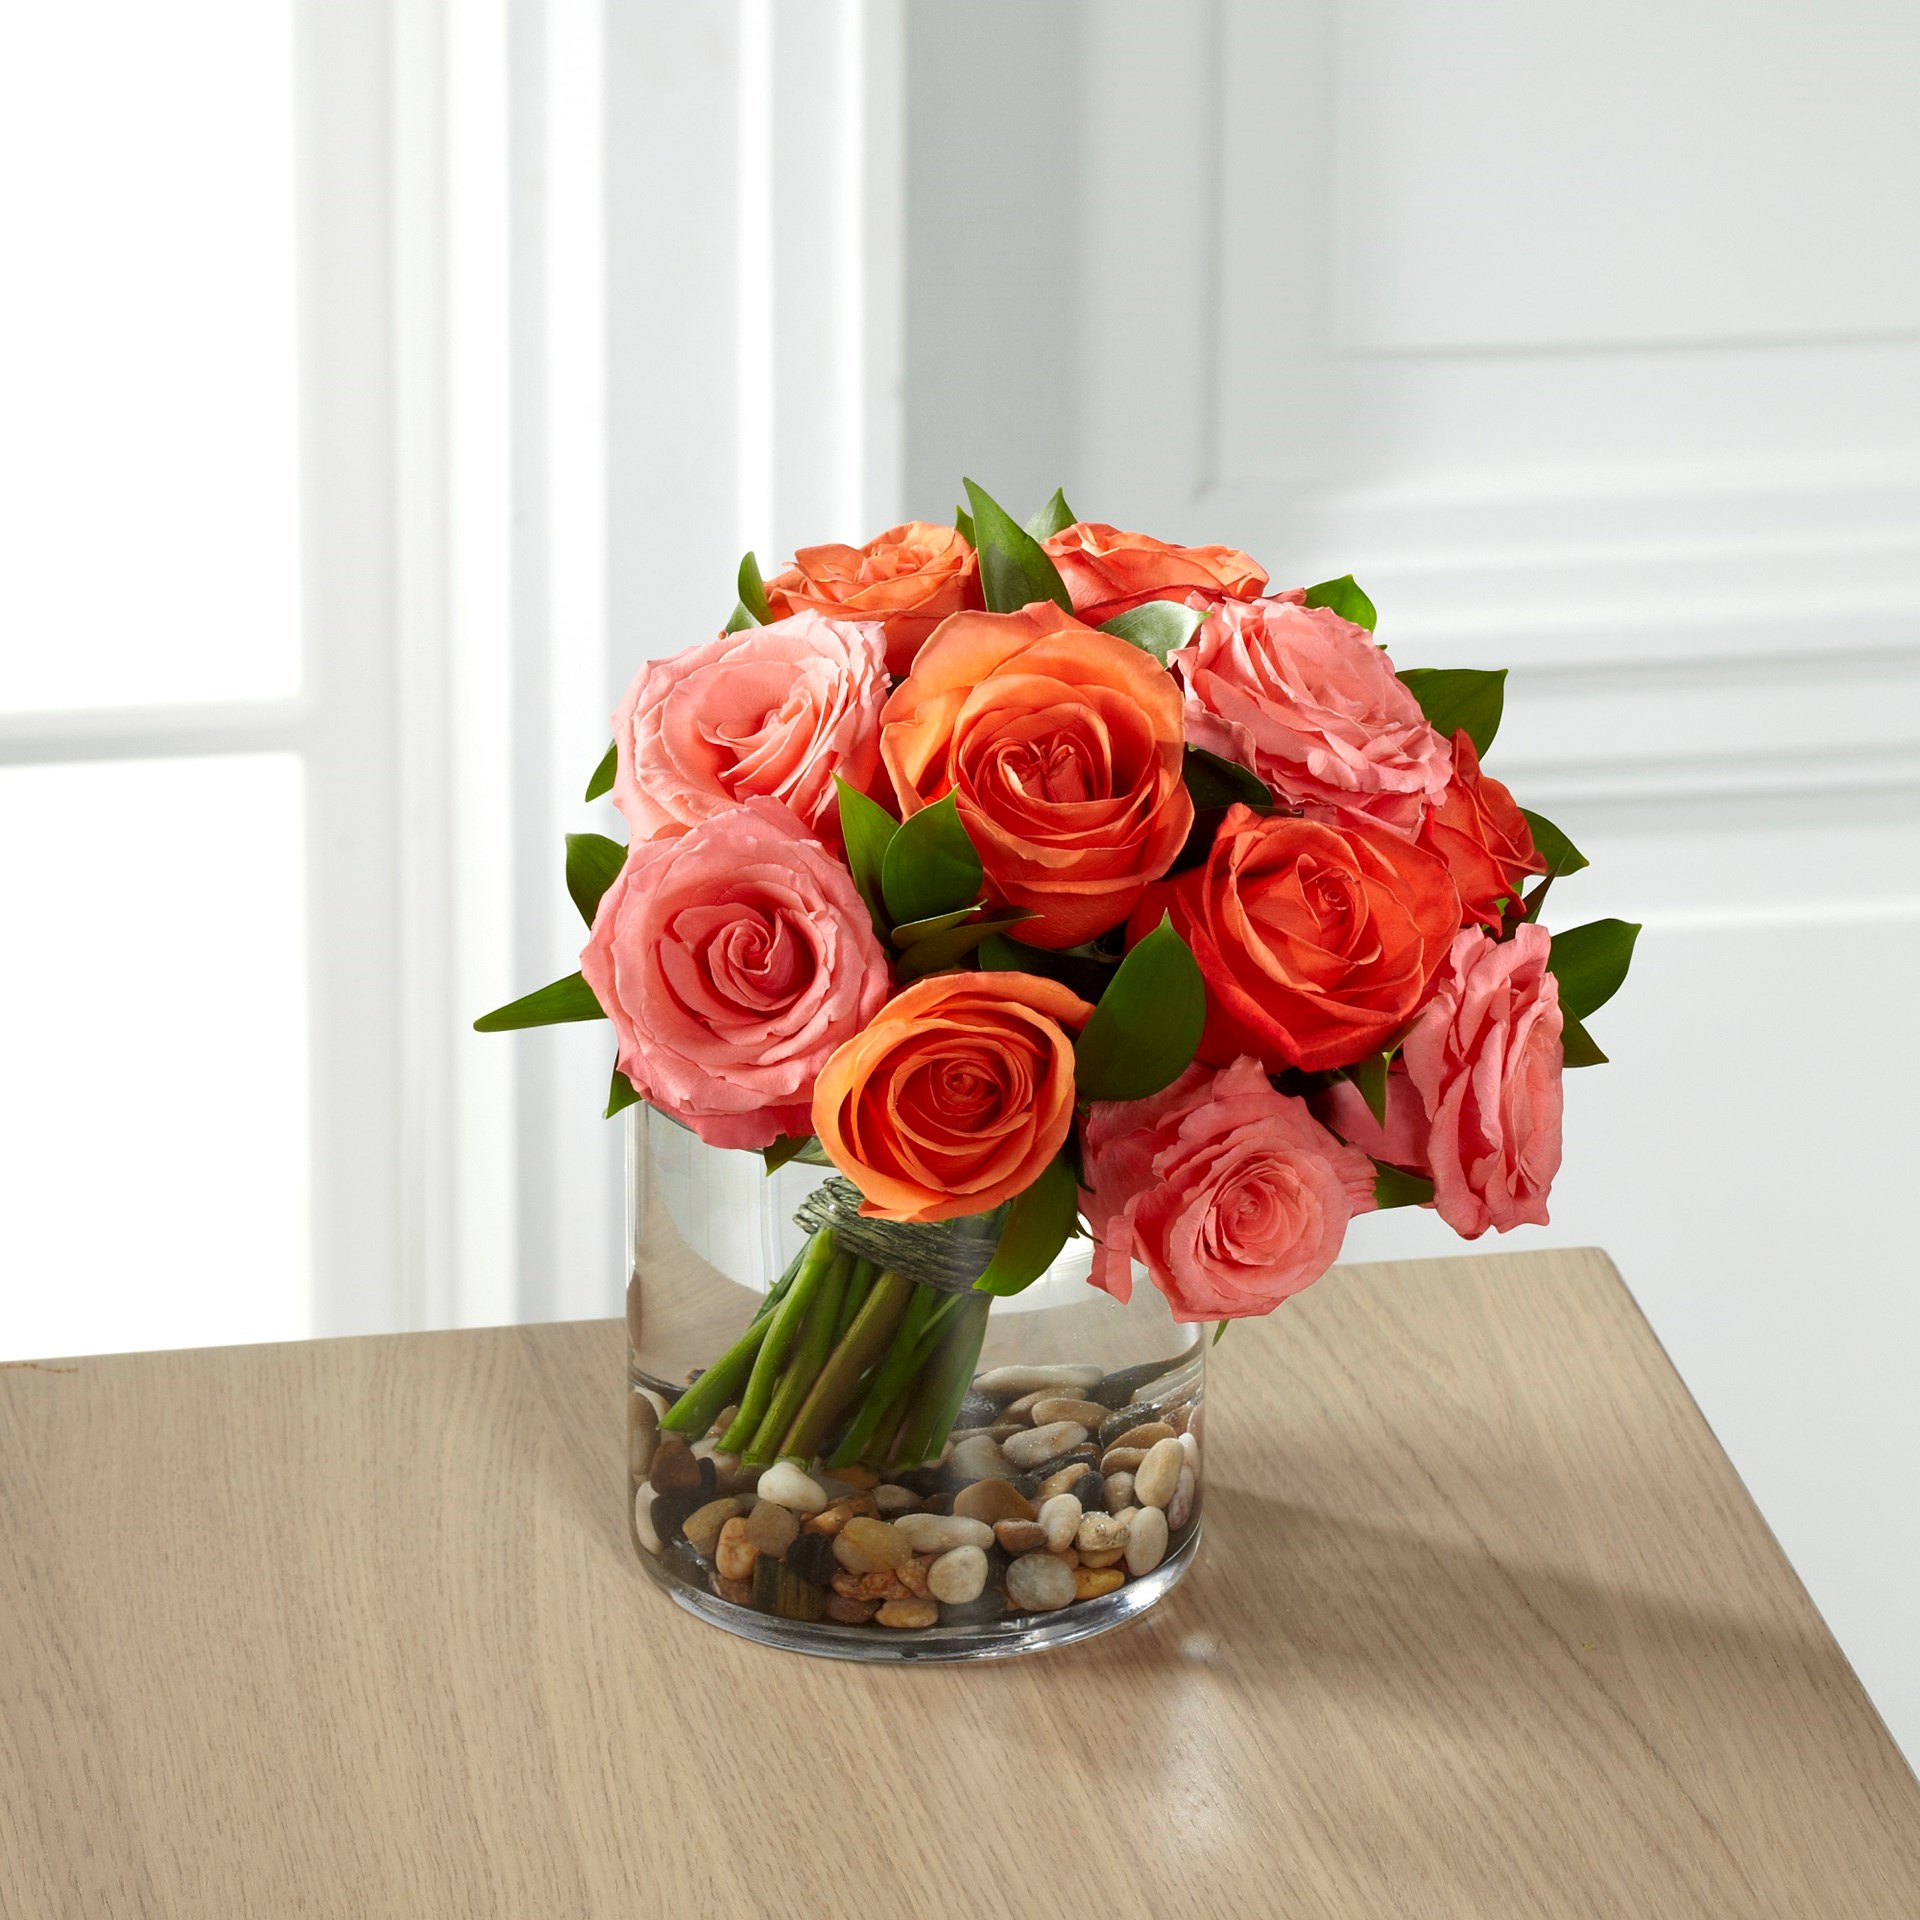 The FTD Blazing Beauty Rose Bouquet